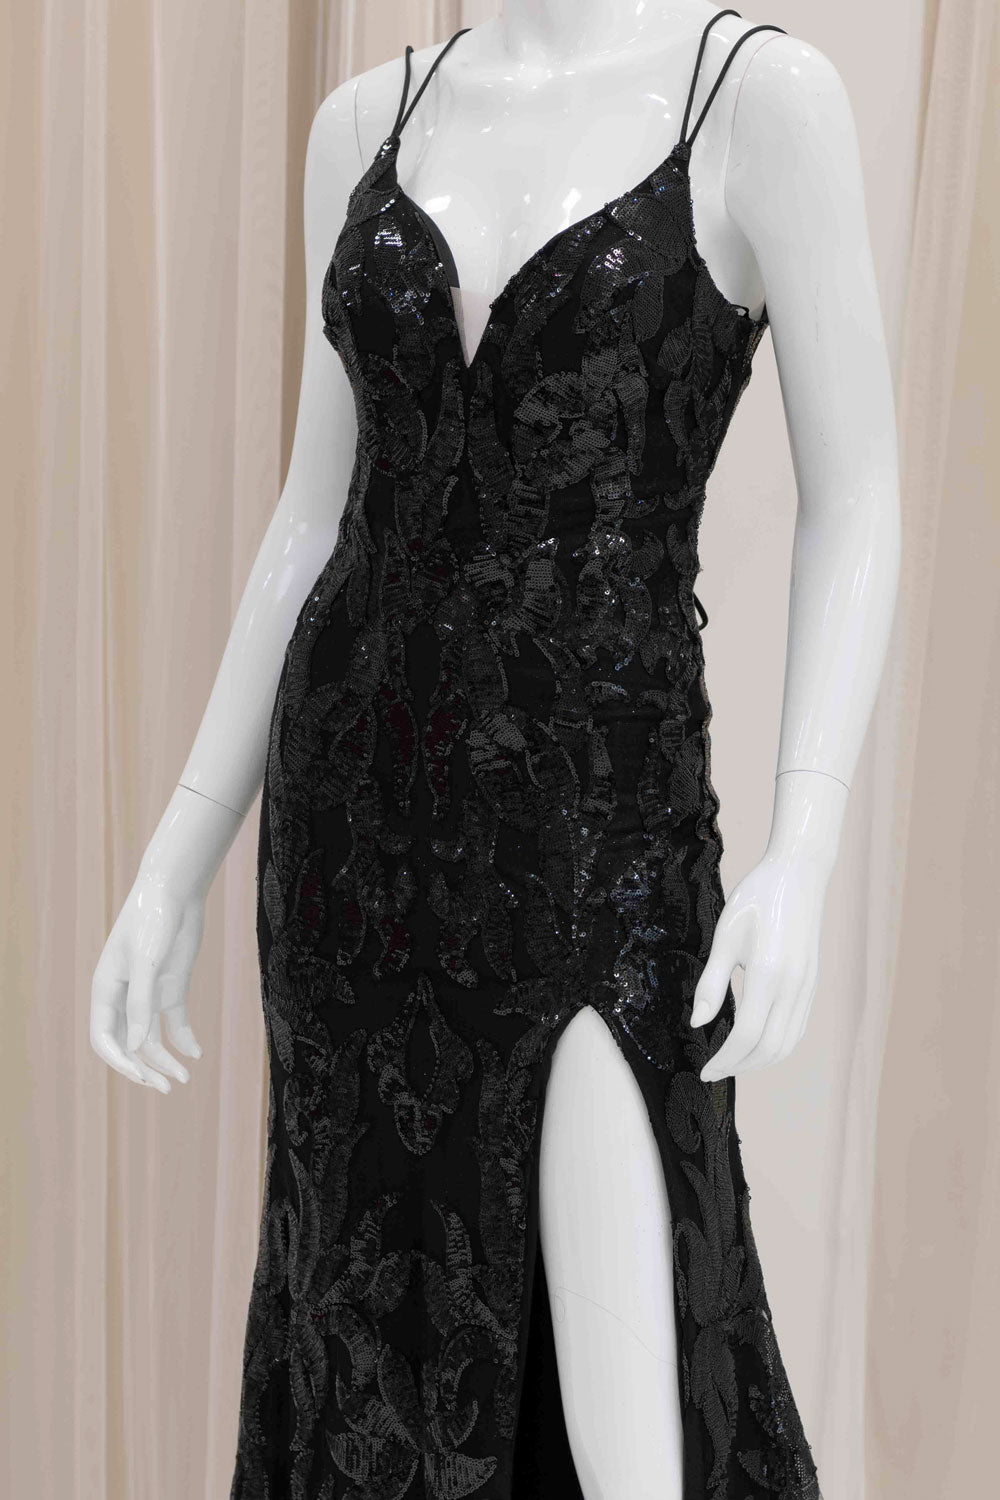 Sequin Black Prom Dress with Slit